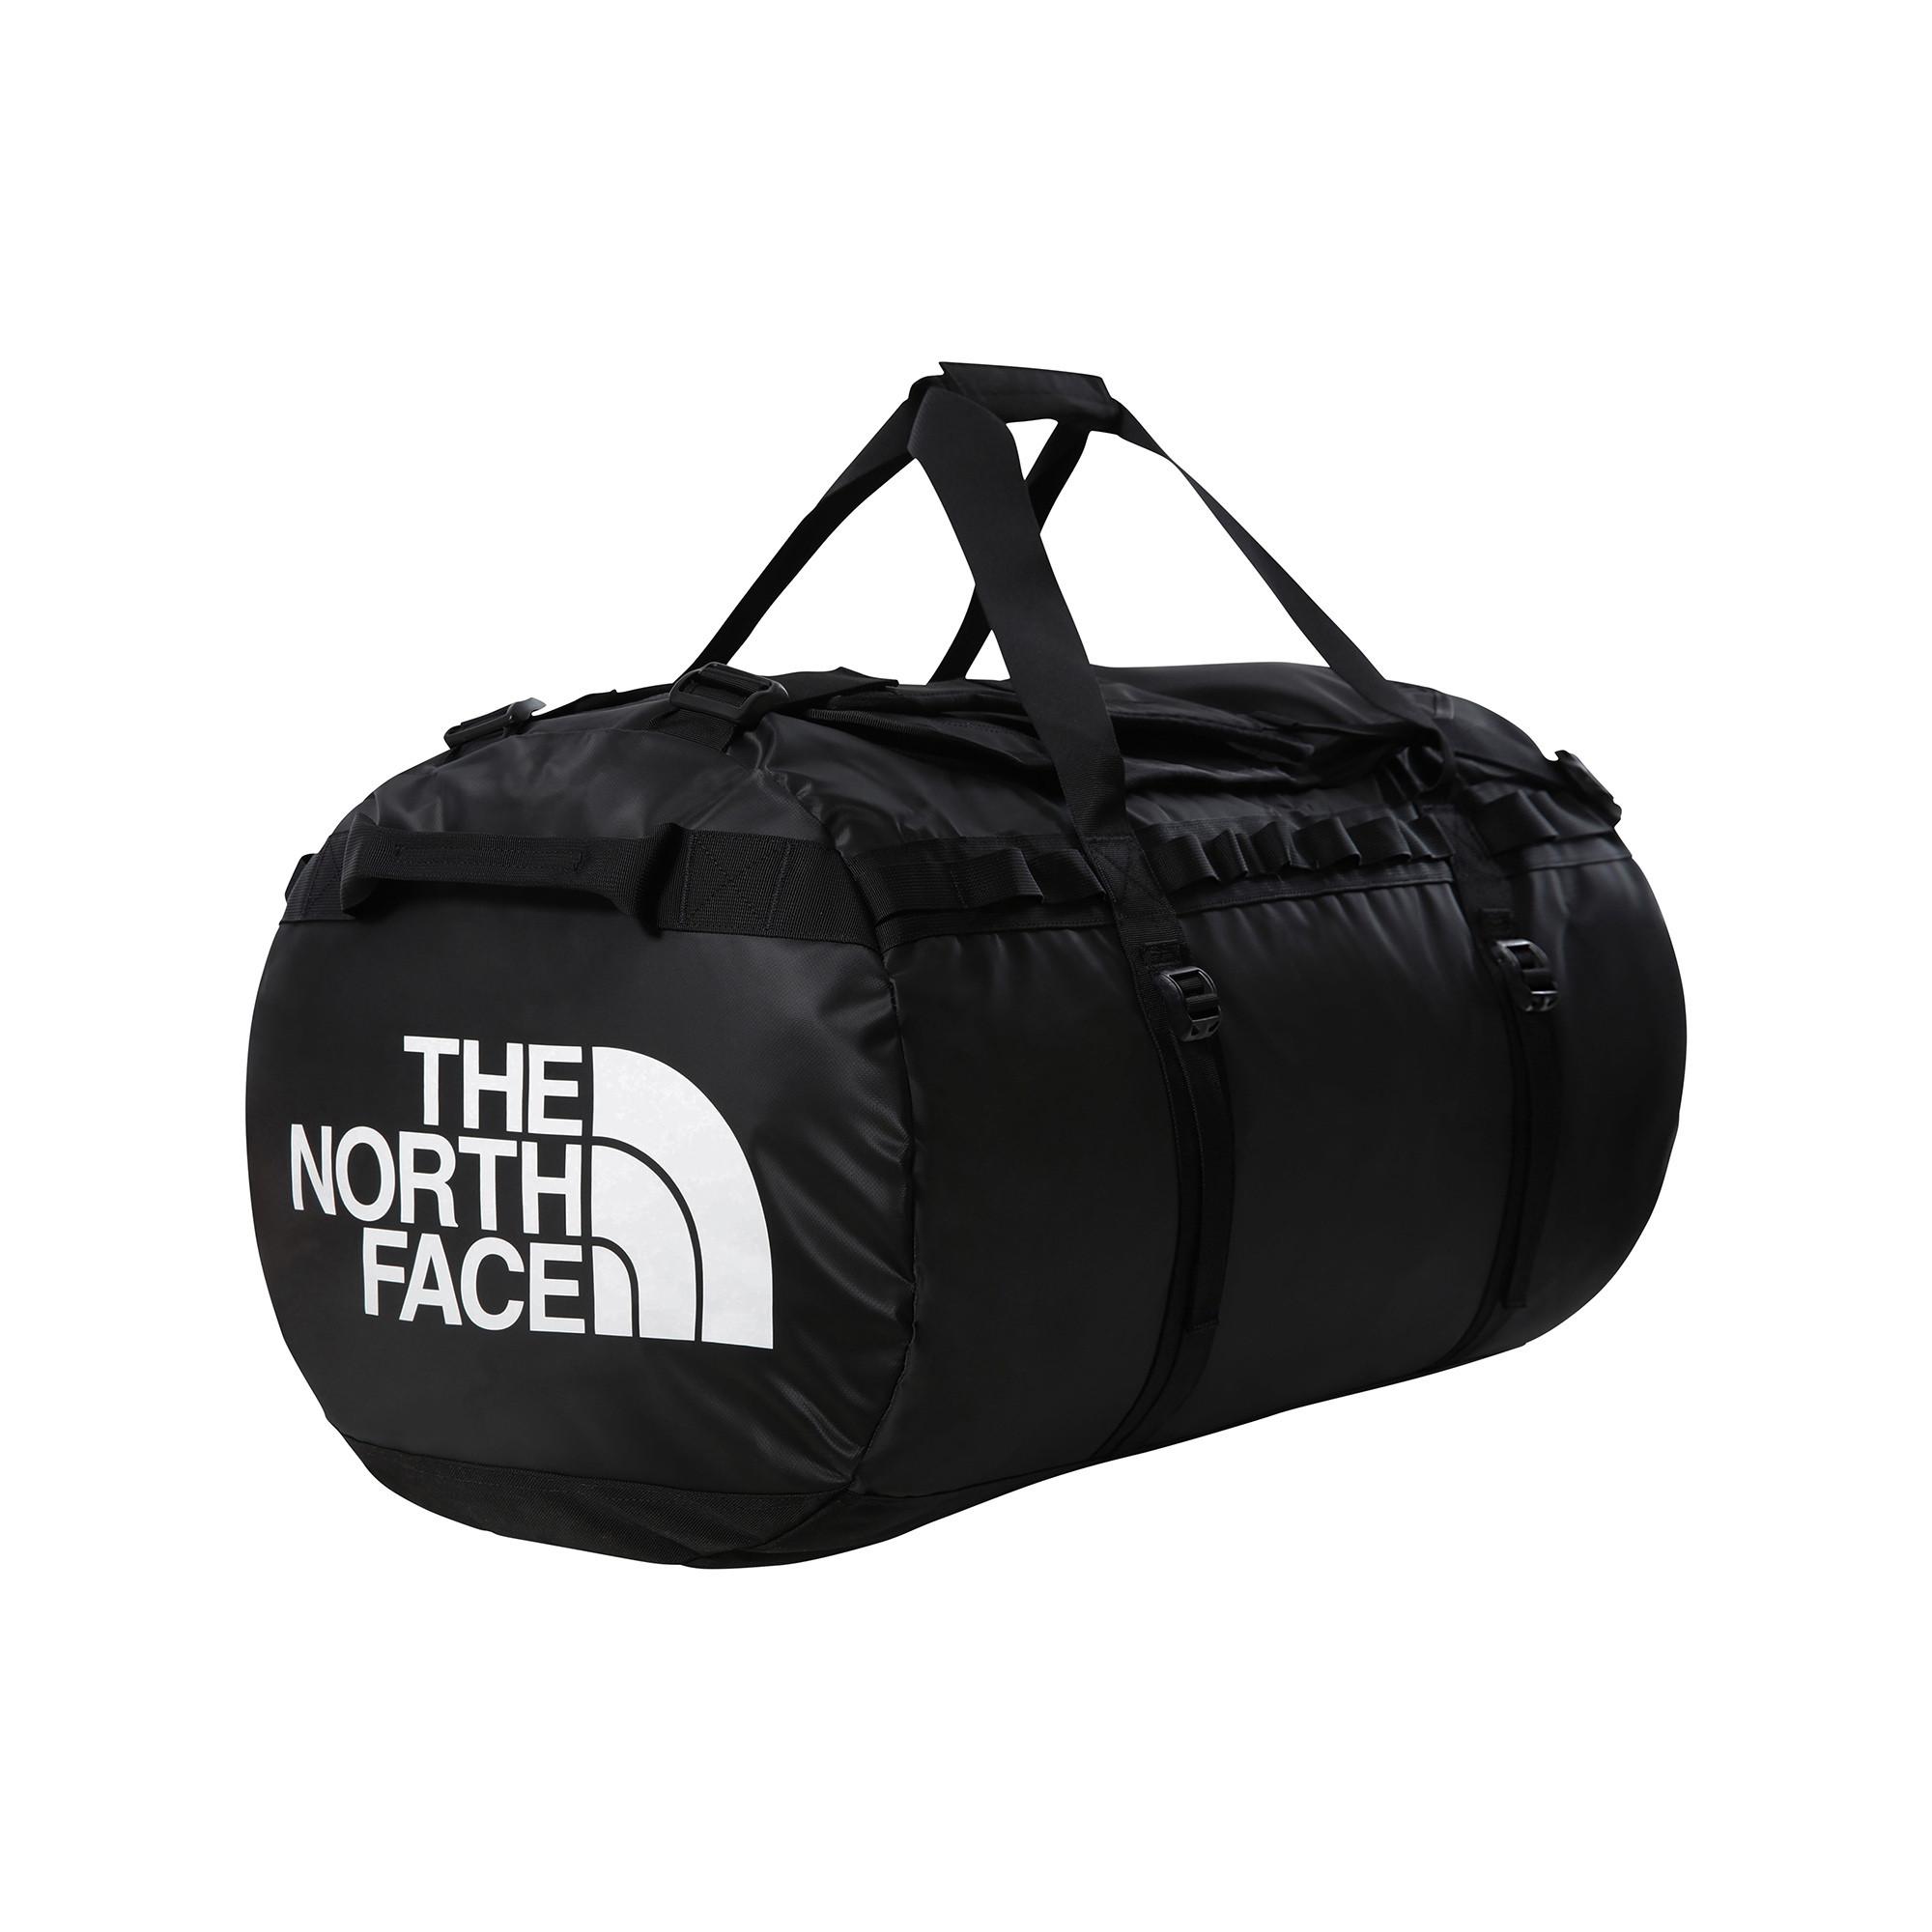 THE NORTH FACE BASE CAMP DUFFEL - XL Duffle Bag
 